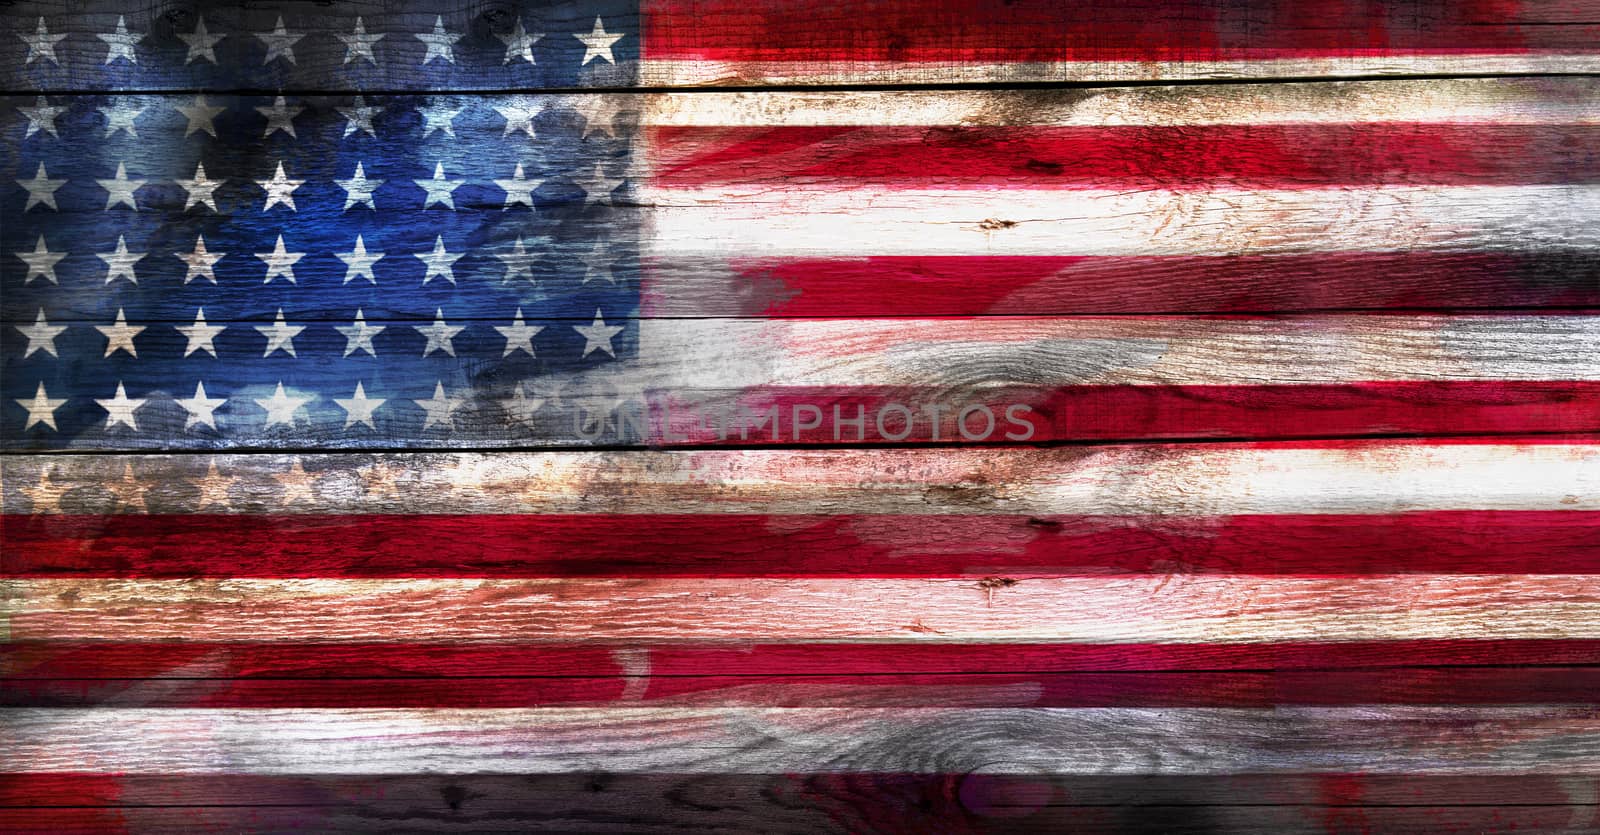 USA flag on a wood surface by SlayCer